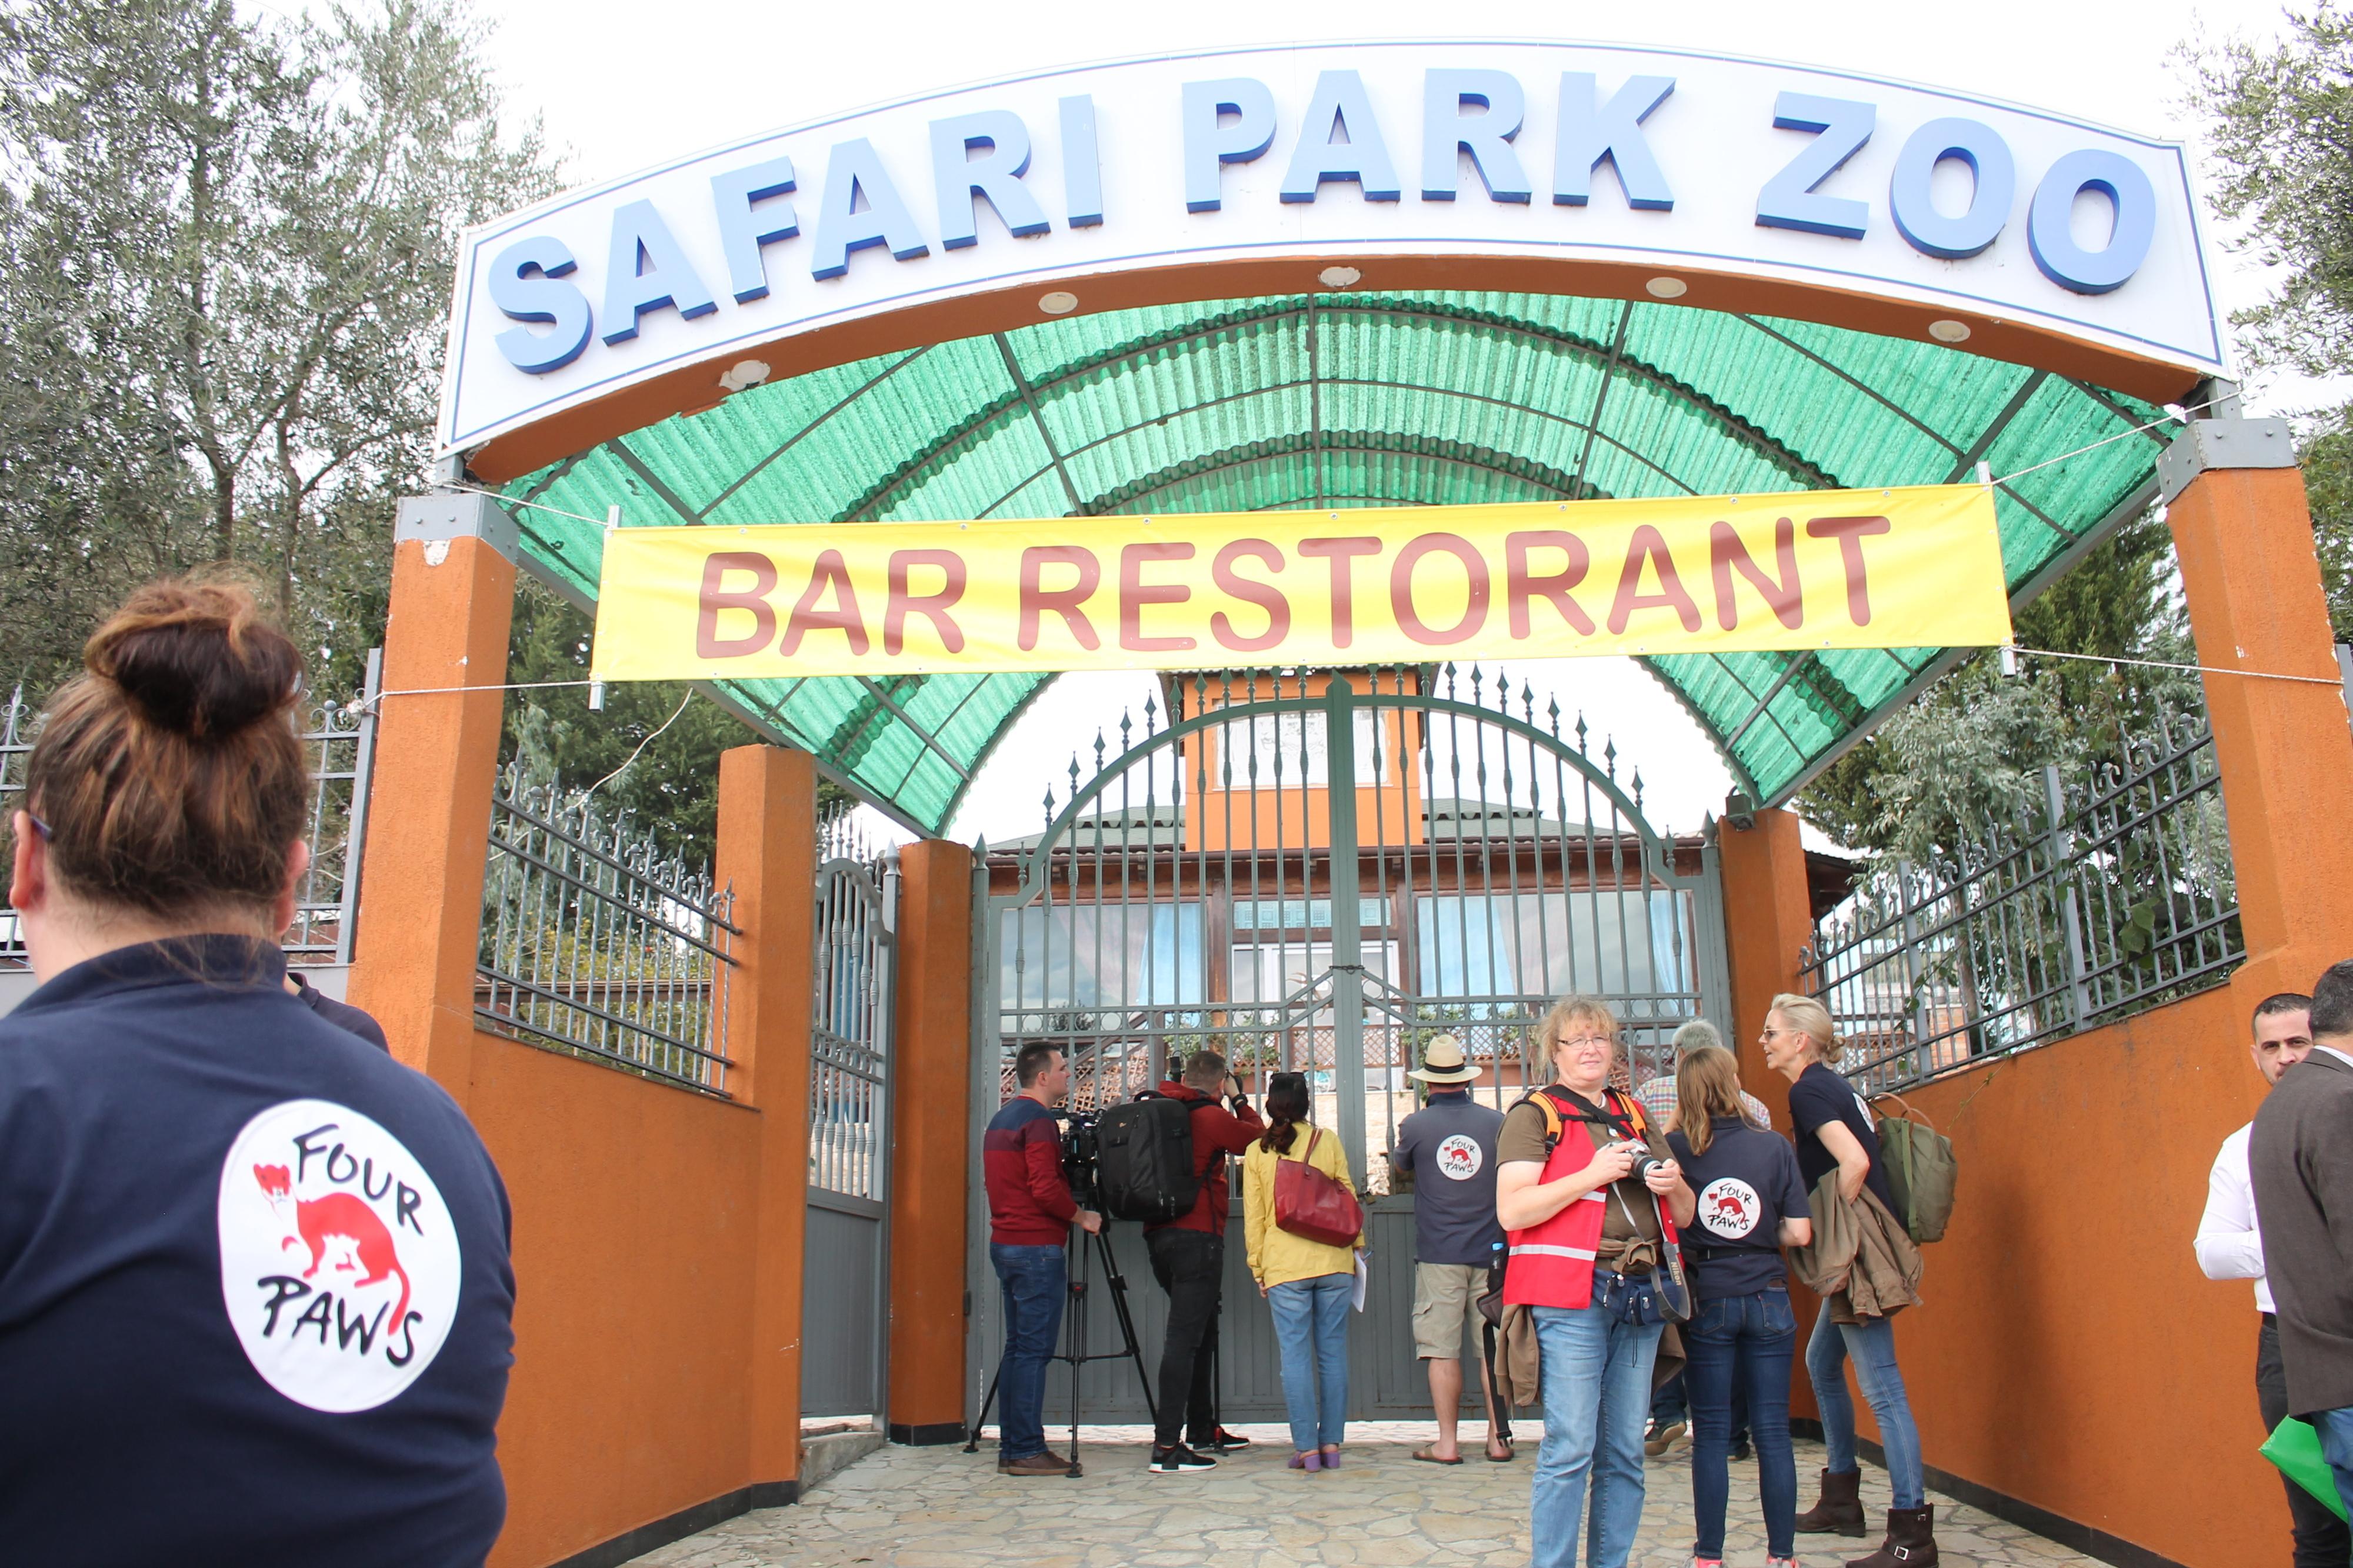 safari park zoo fier